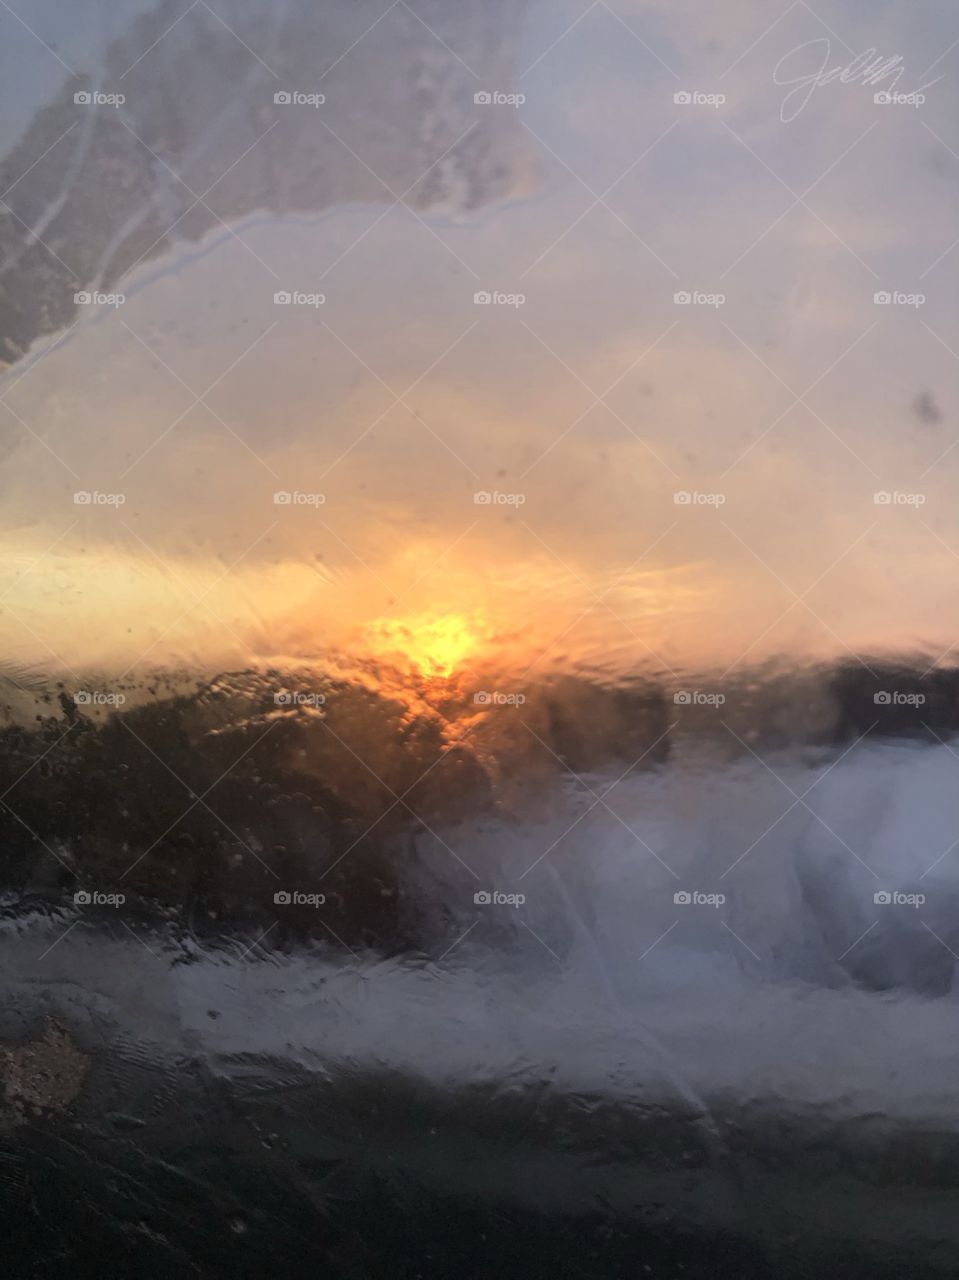 blurry sunset through watery car window 